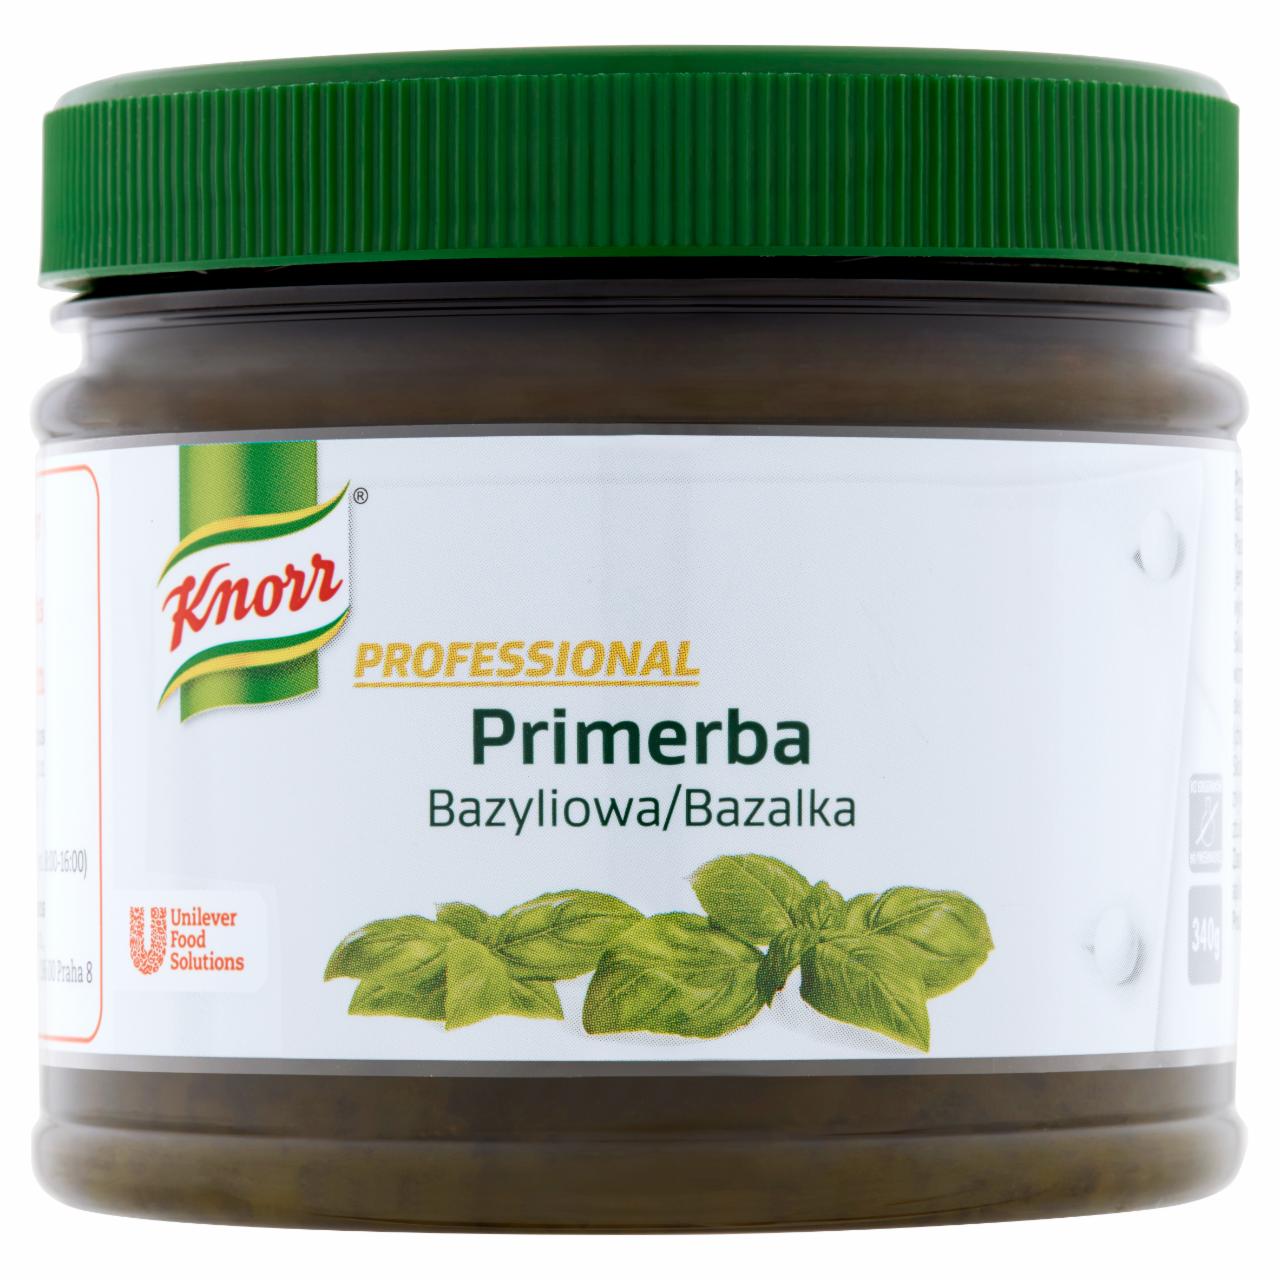 Photo - Knorr Professional Basil Primerba Herbal Paste Seasoning 340 g